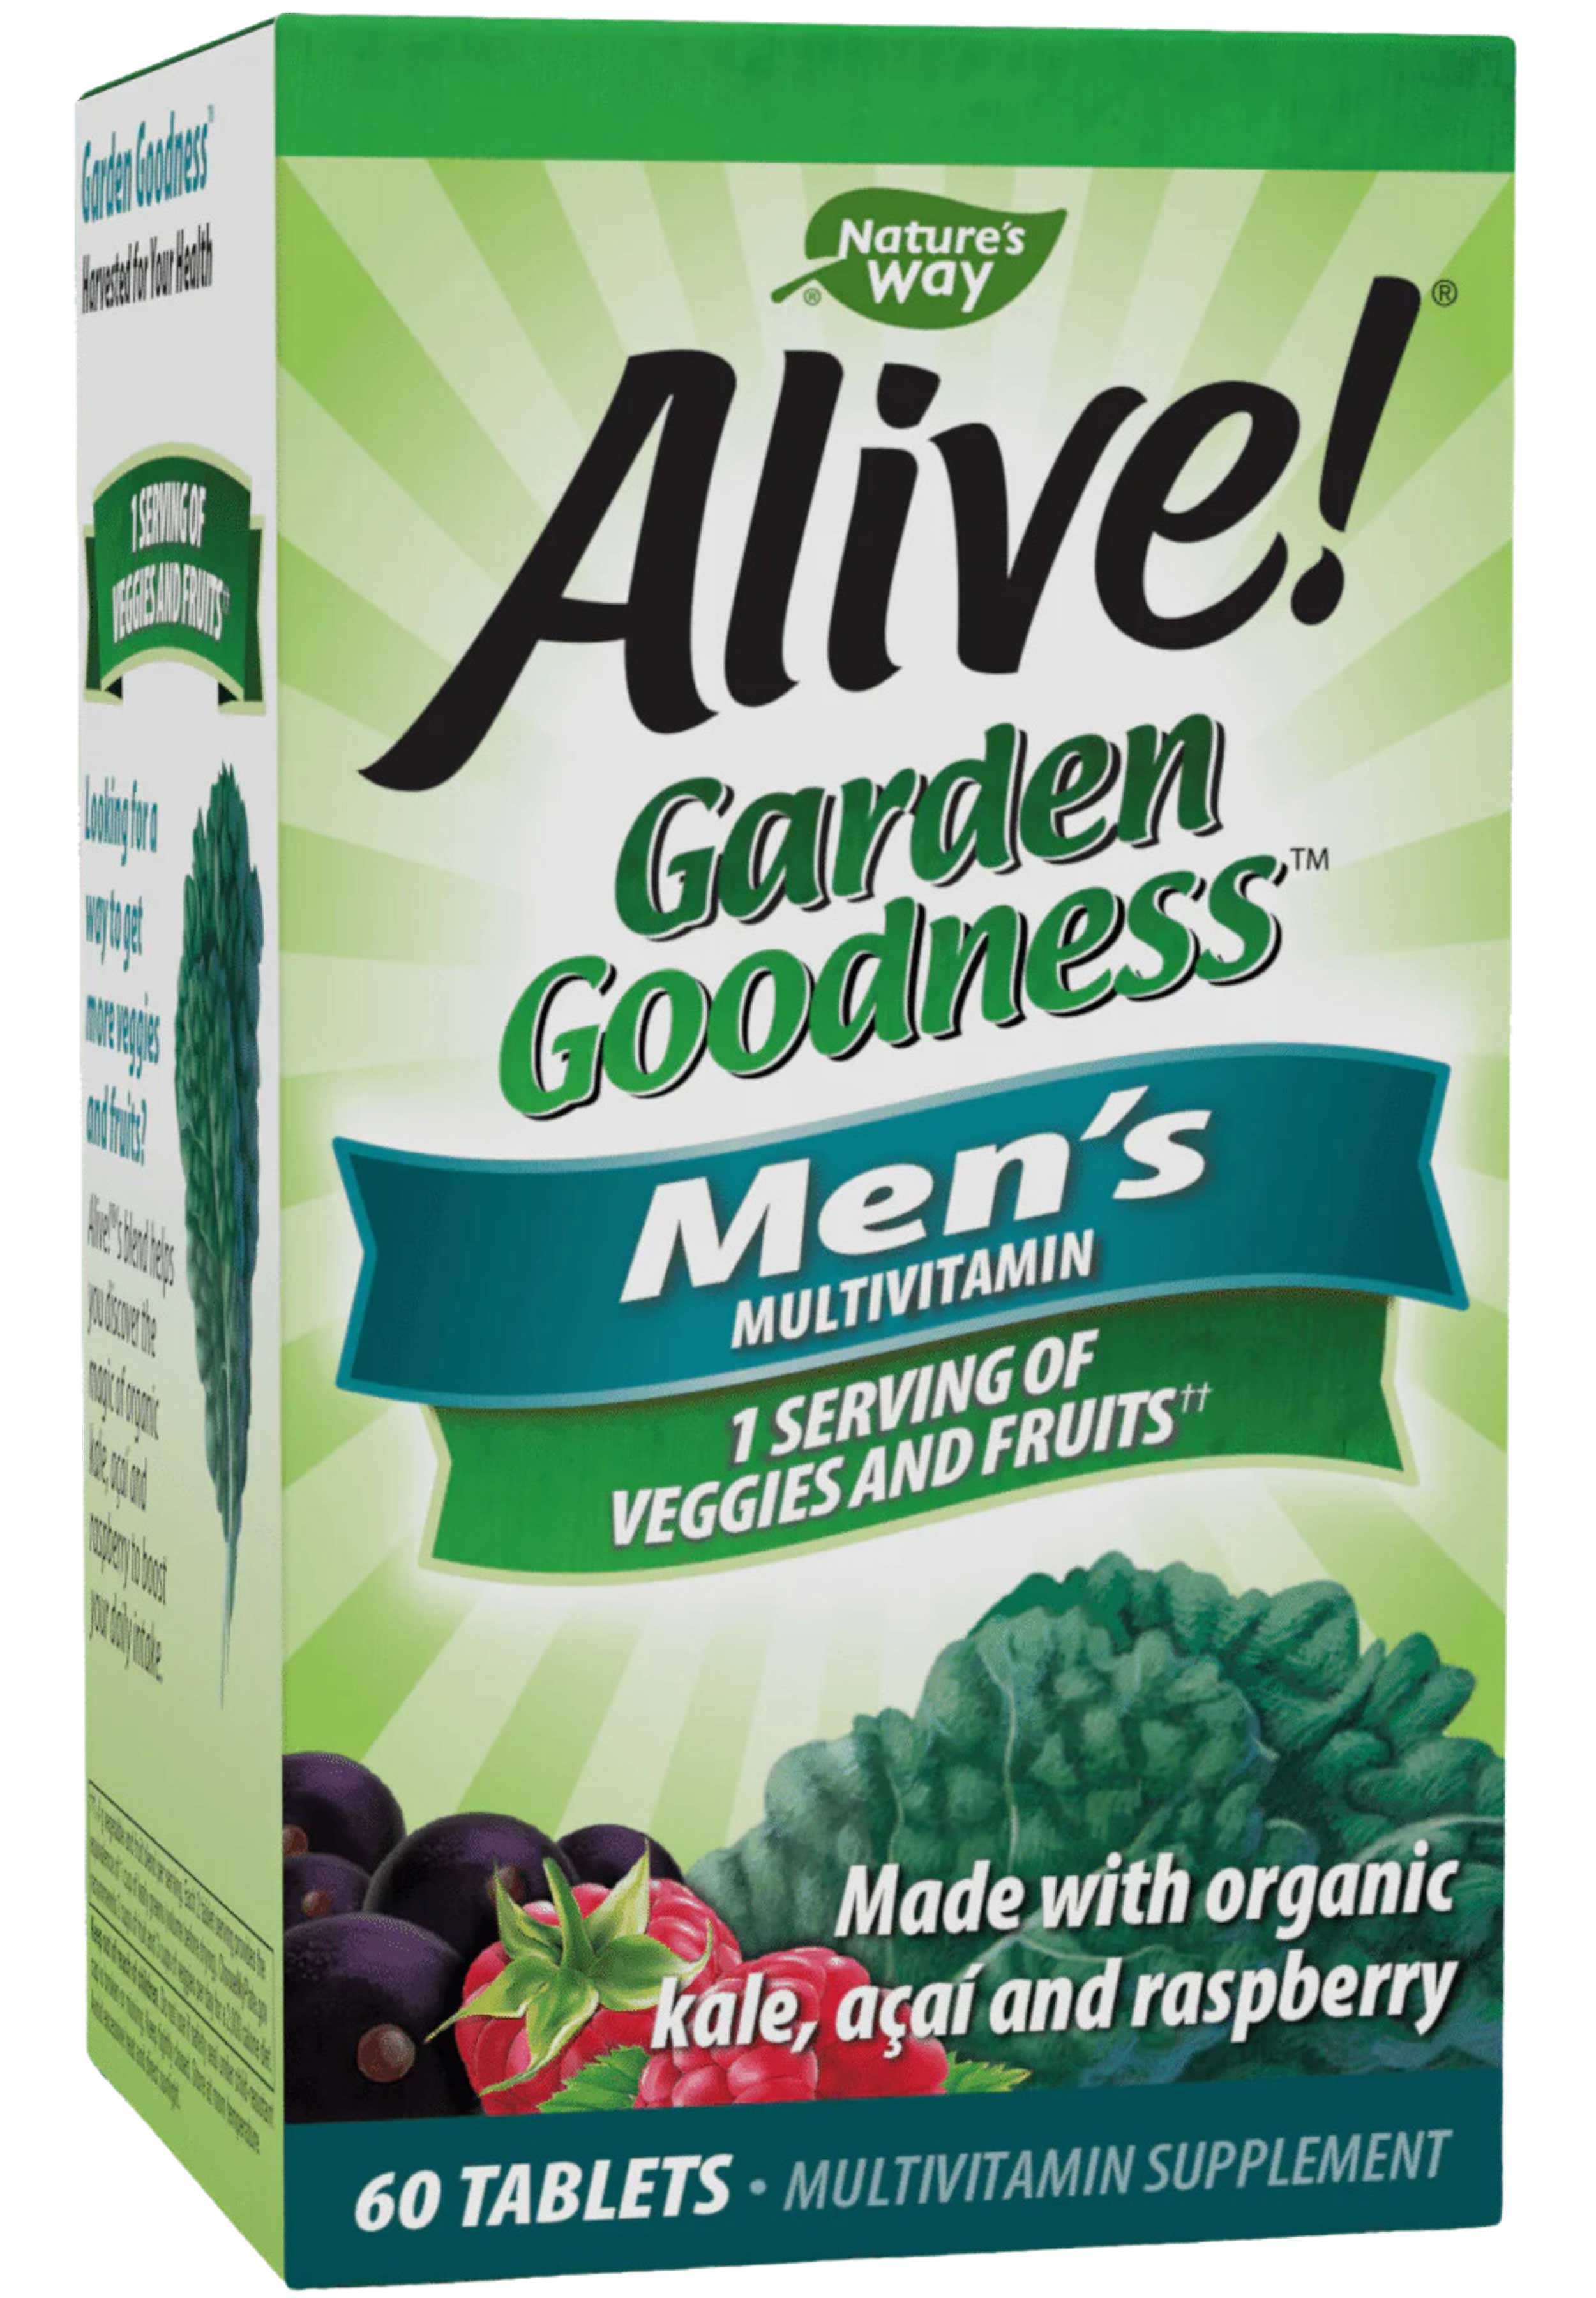 Nature's Way Alive! Garden Goodness Men's Multi